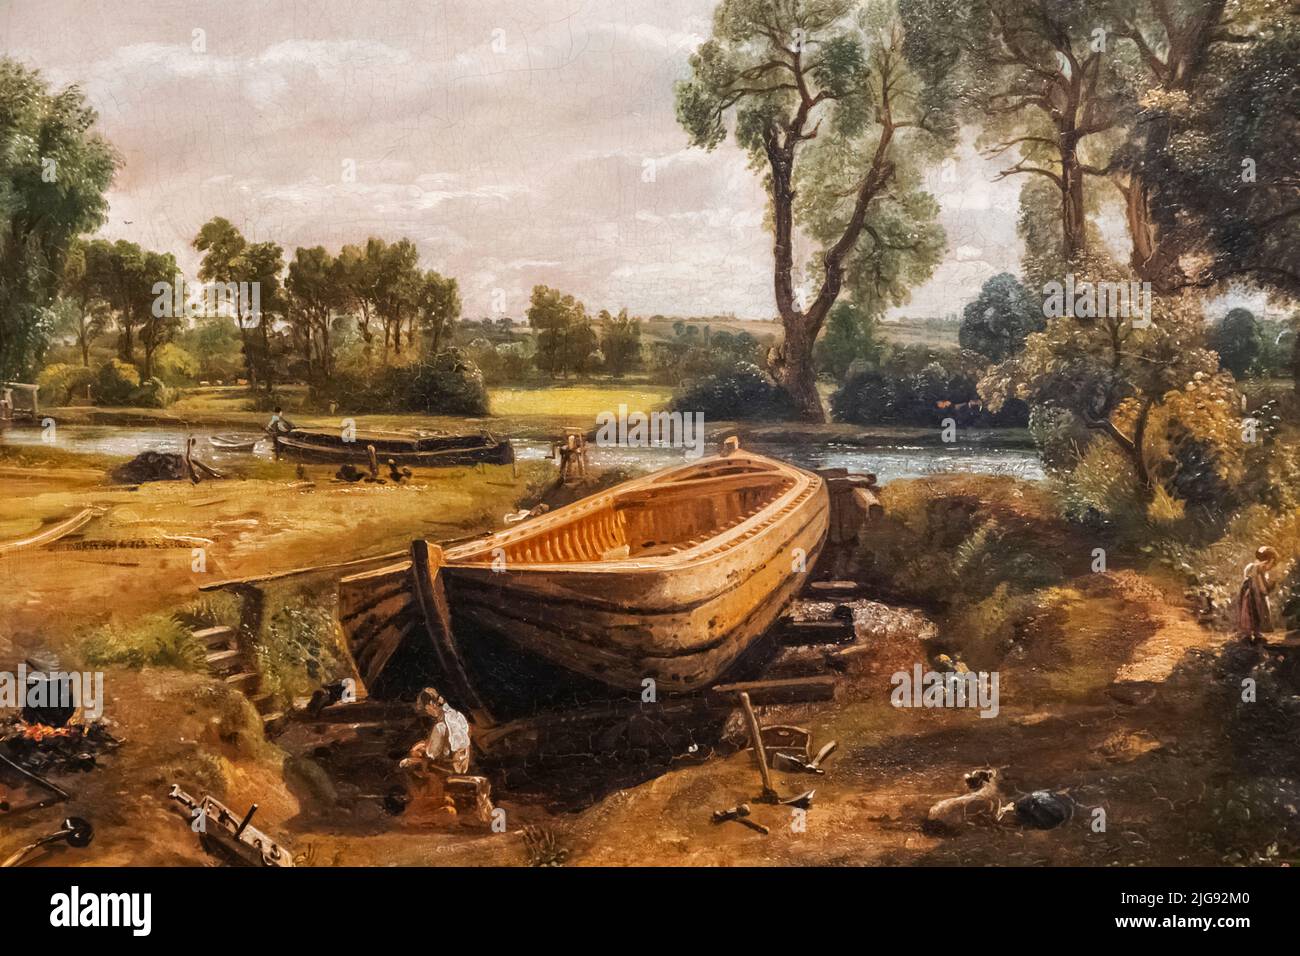 Inghilterra, Londra, Knightsbridge, Victoria and Albert Museum, dipinto dal titolo "Boat Building near Flatford Mill" di John Constable datato 1815 Foto Stock